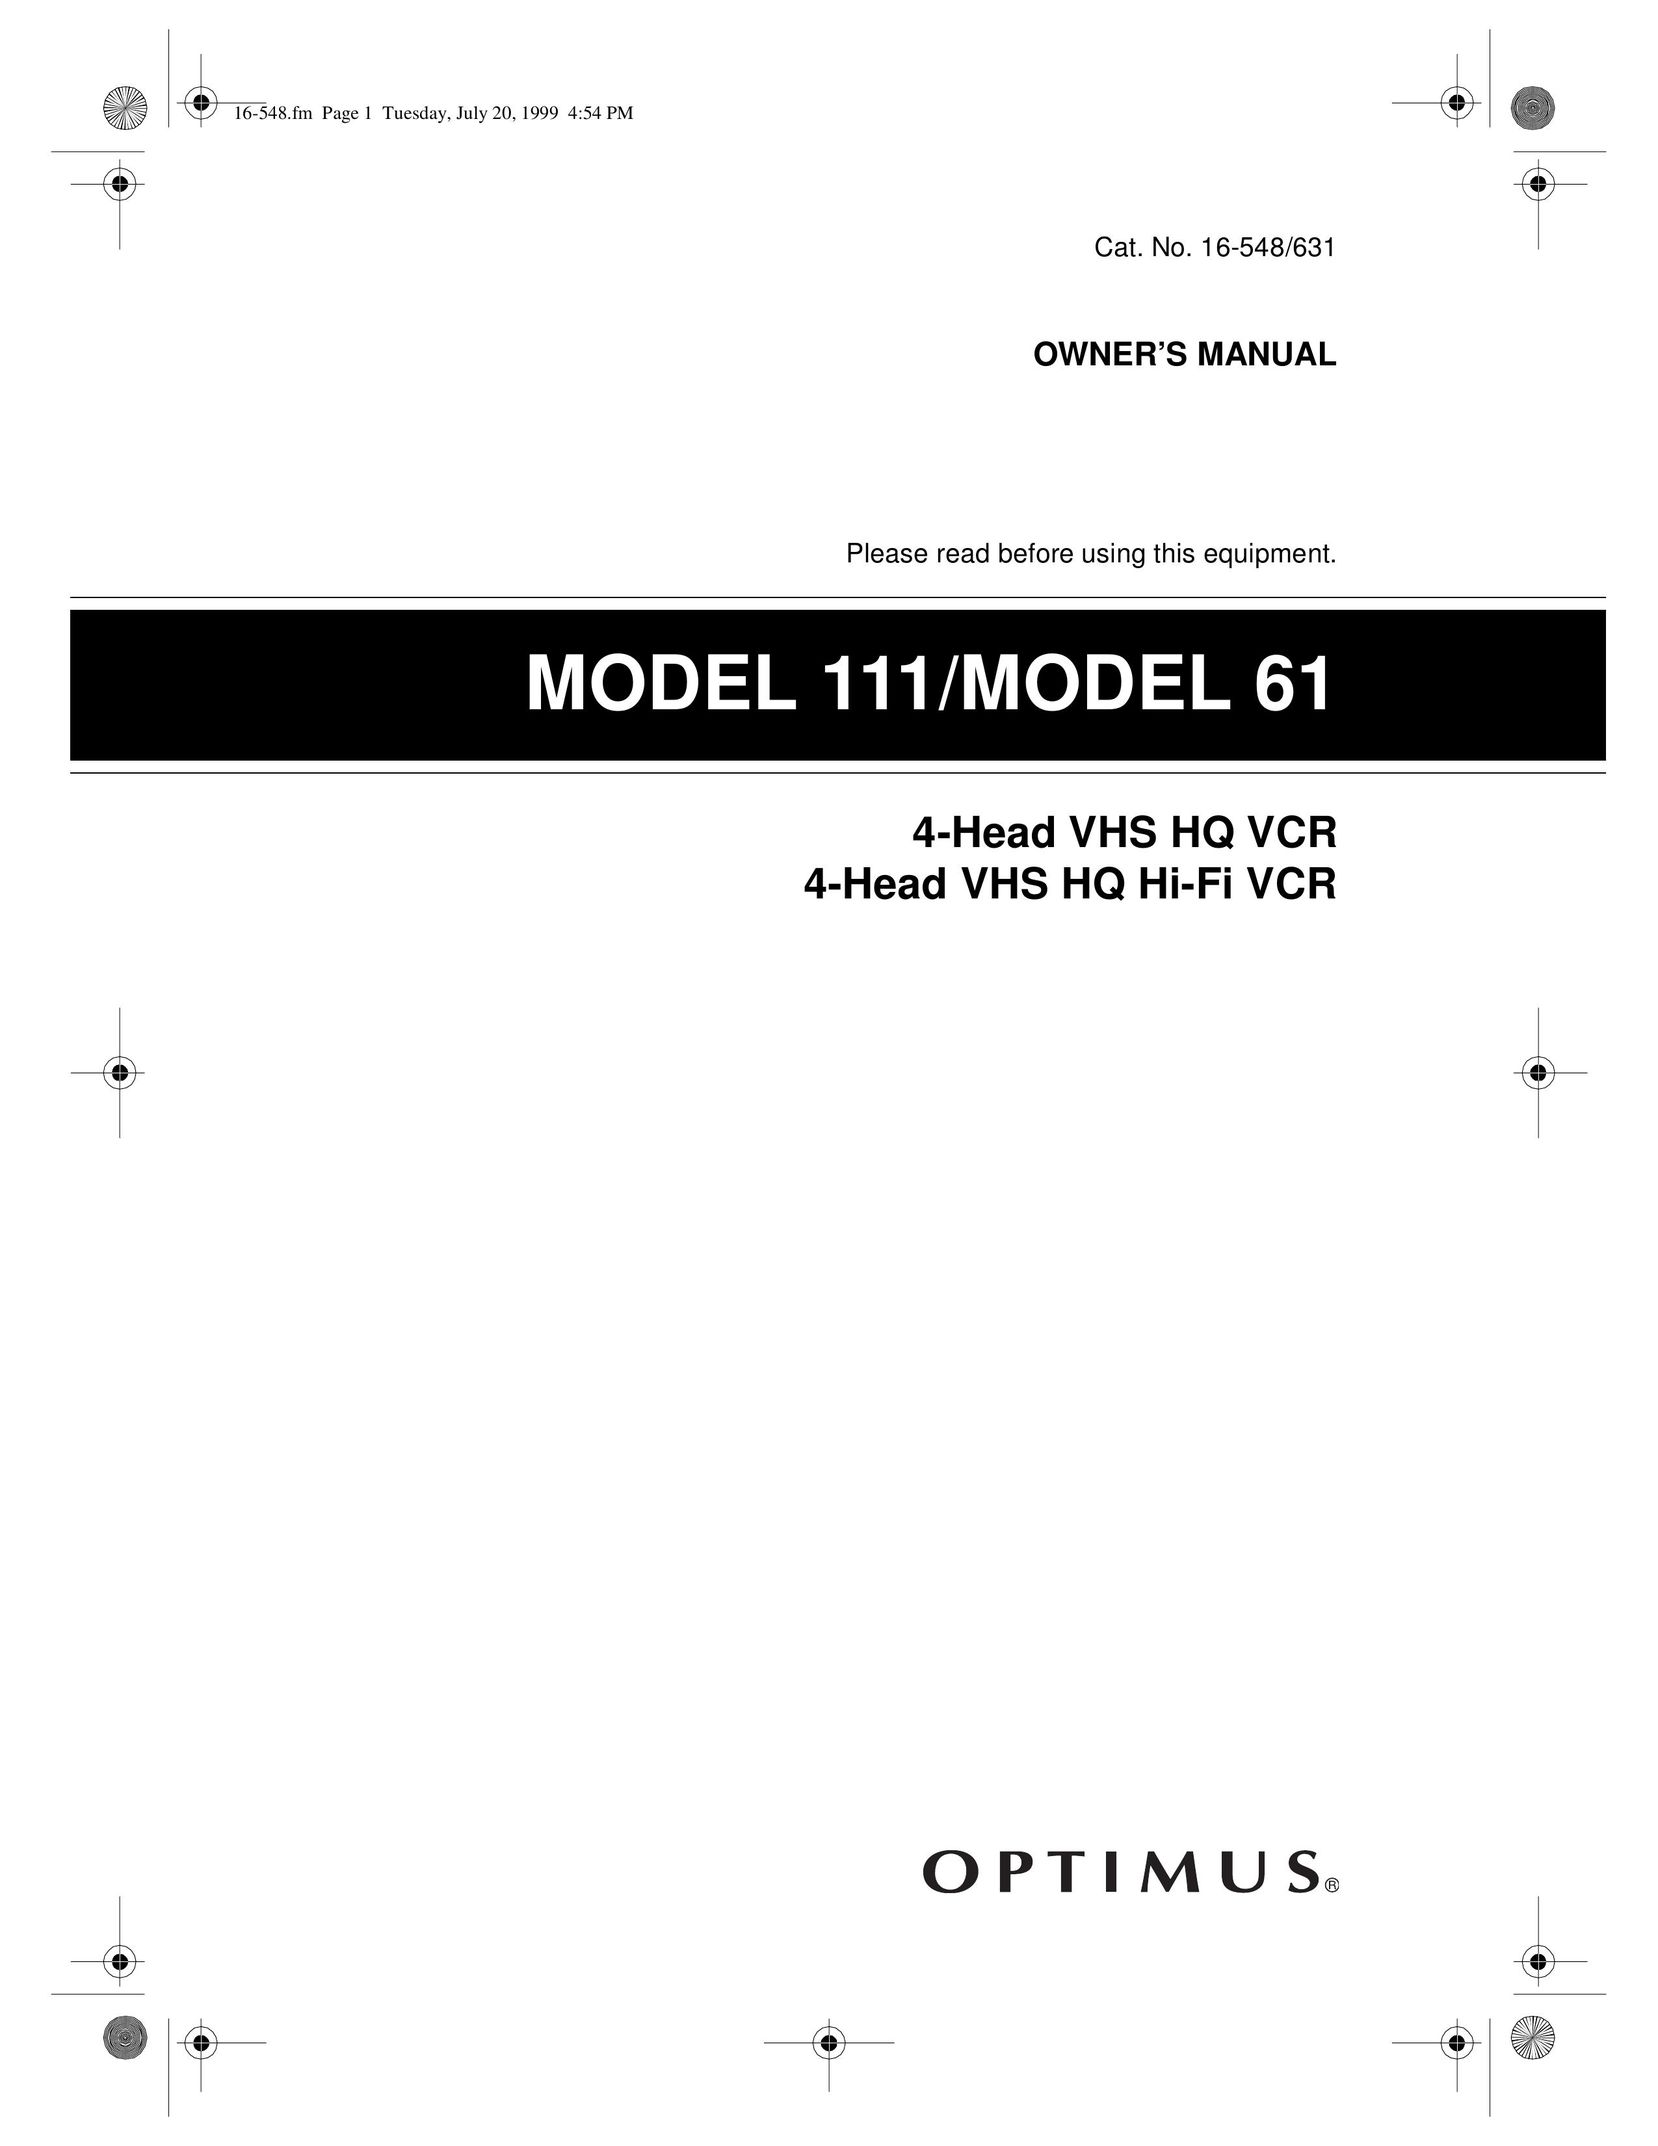 Optimus - Katadyn Products Inc. MODEL 111 VCR User Manual